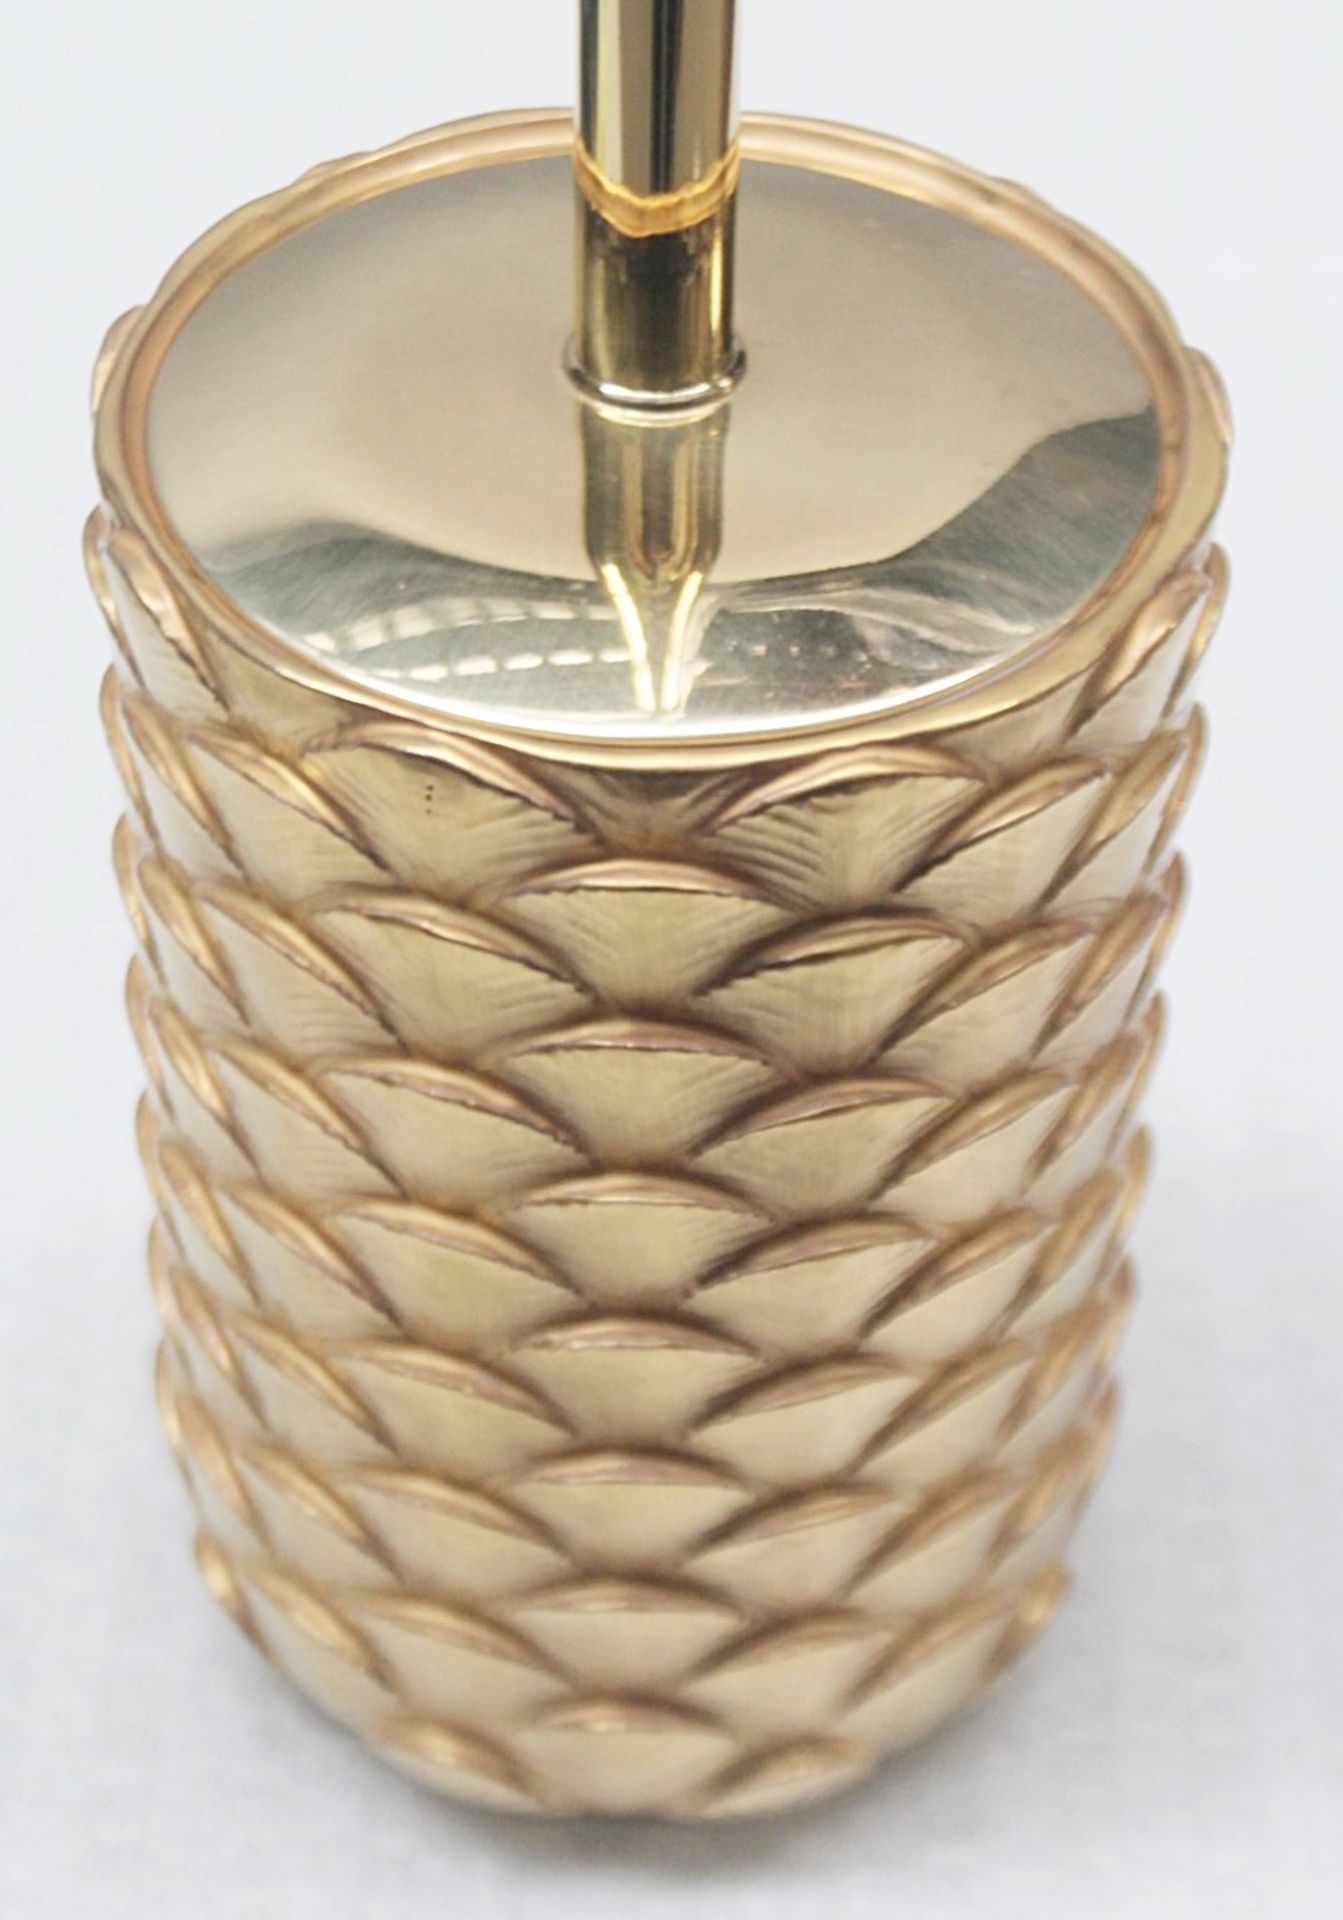 1 x VILLARI 'Peacock' Opulent 24-karat Gold Decorated Porcelain Toilet Brush Holder - RRP £459.00 - Image 4 of 9